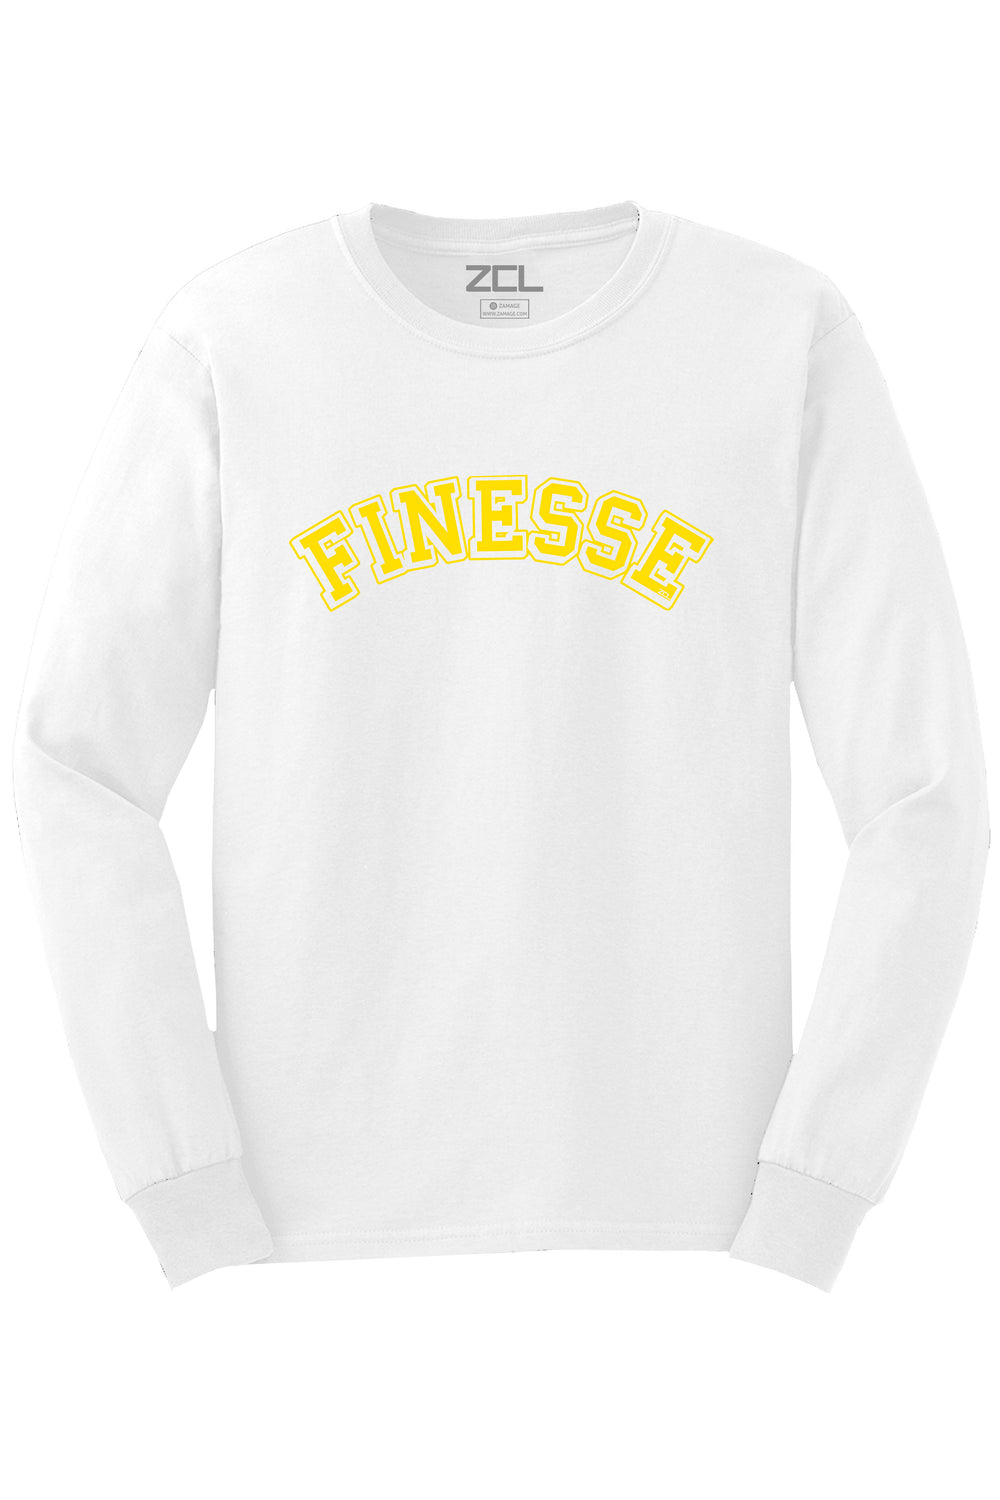 Finesse Long Sleeve Tee (Yellow Logo) - Zamage